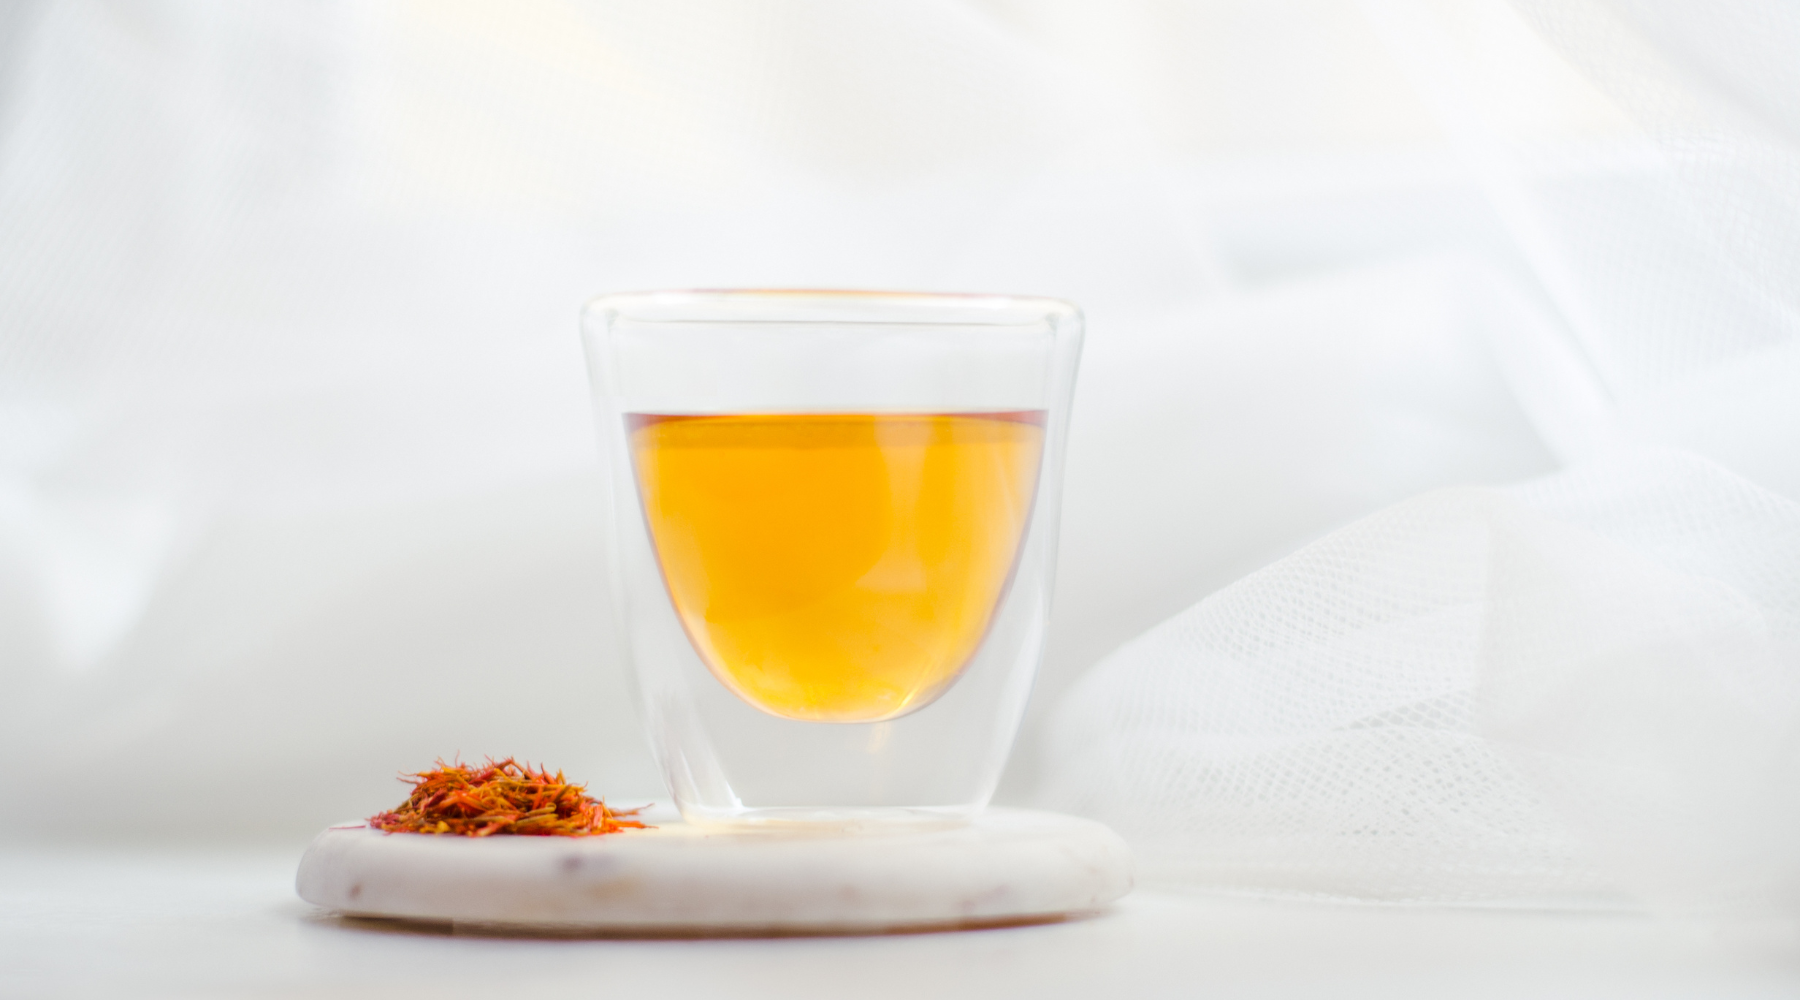 A glass of saffron infused tea on a white table next to saffron